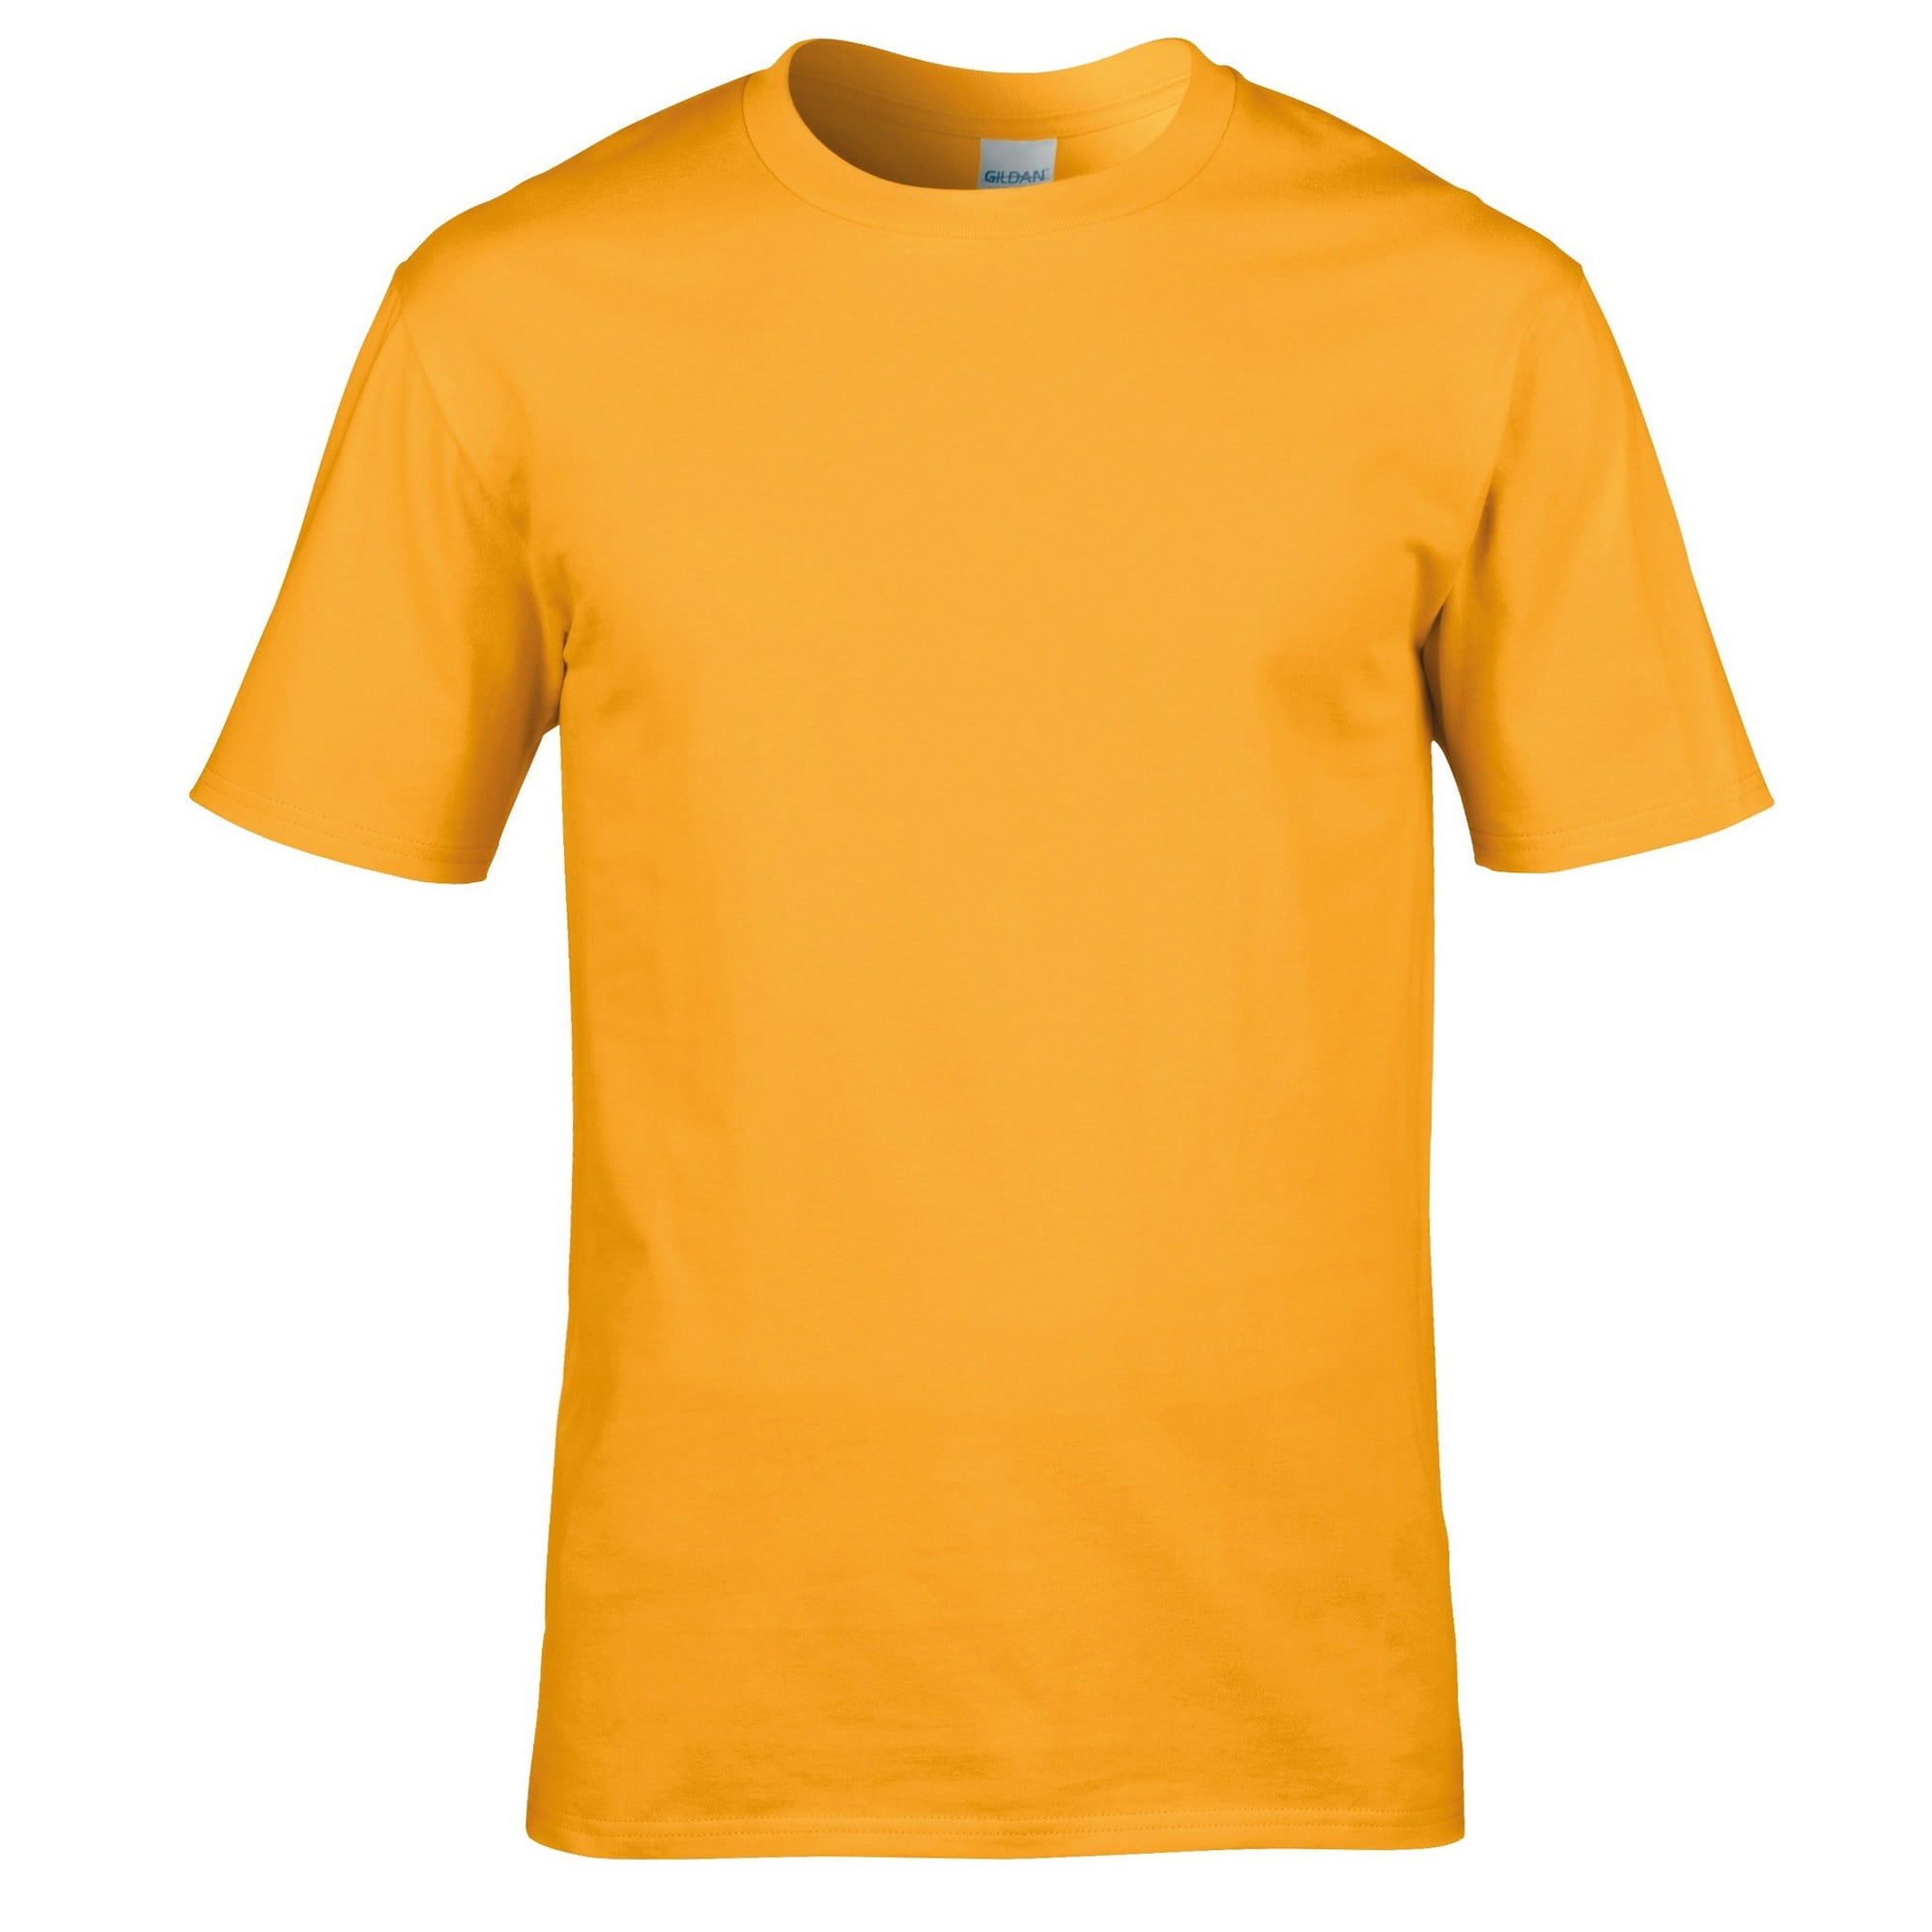 Www spun ru. Gildan Premium Cotton футболка. Футболка на белом фоне. Бело желтые мужские футболки. Футболка e190 желтая.